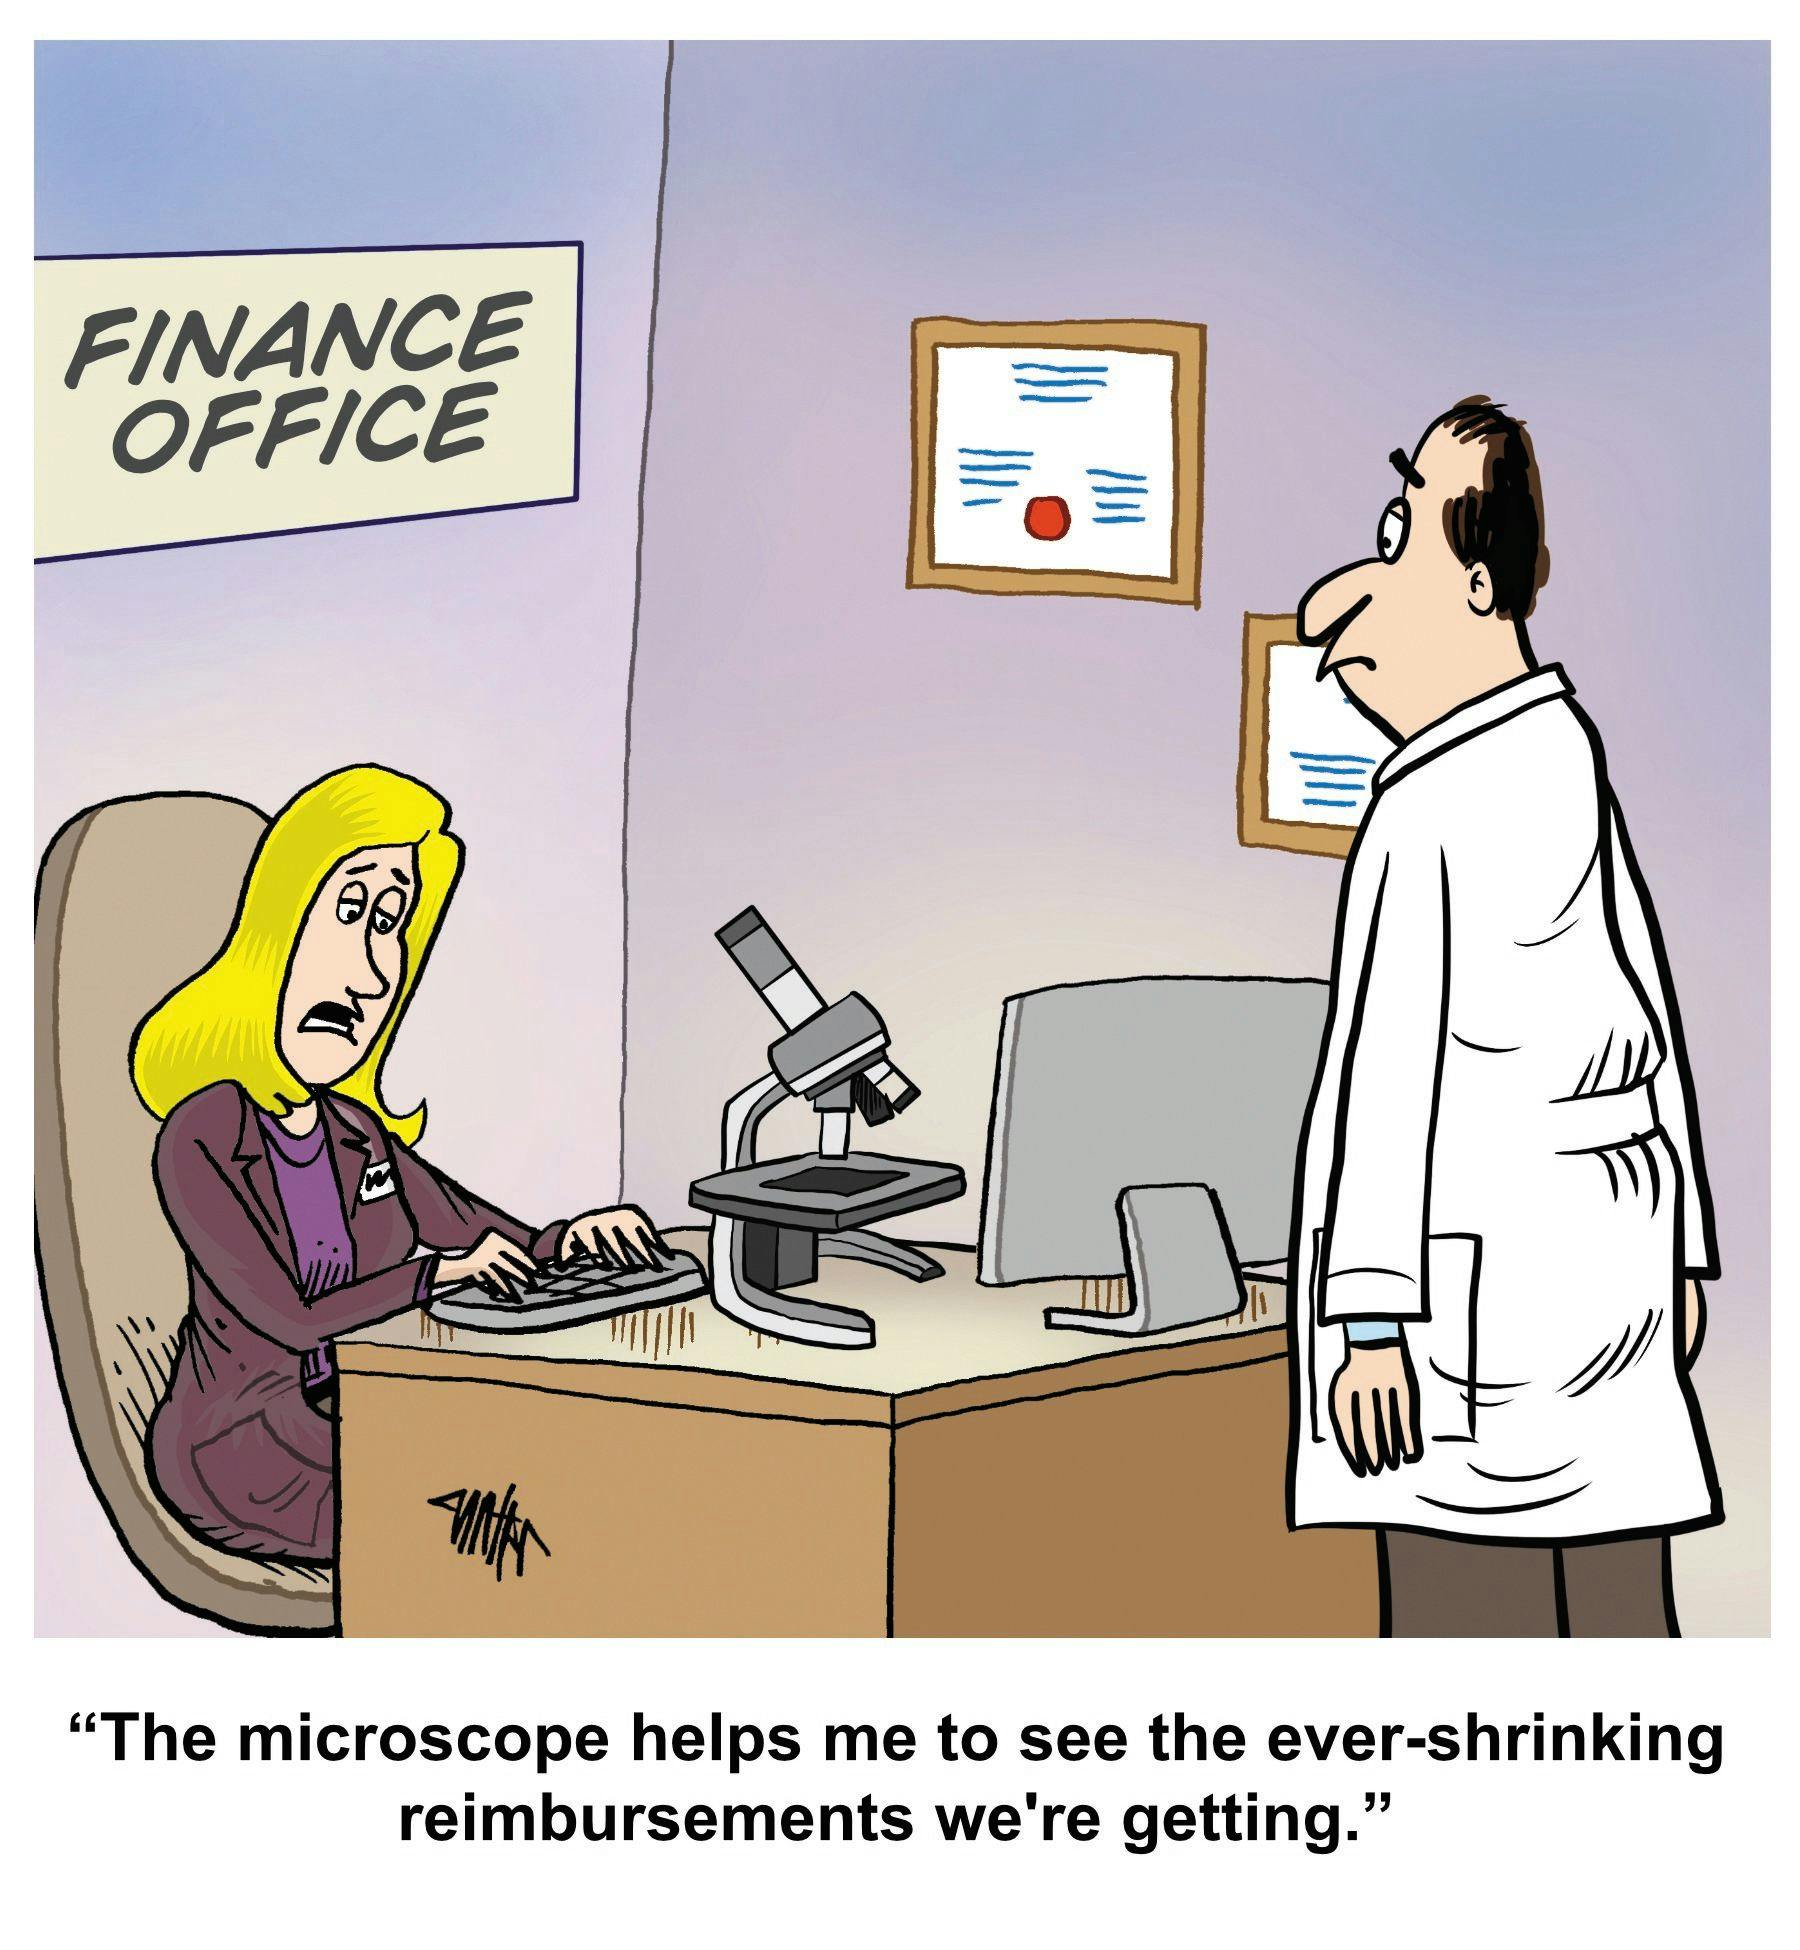 Medical Economics Cartoon: When reimbursements shrink